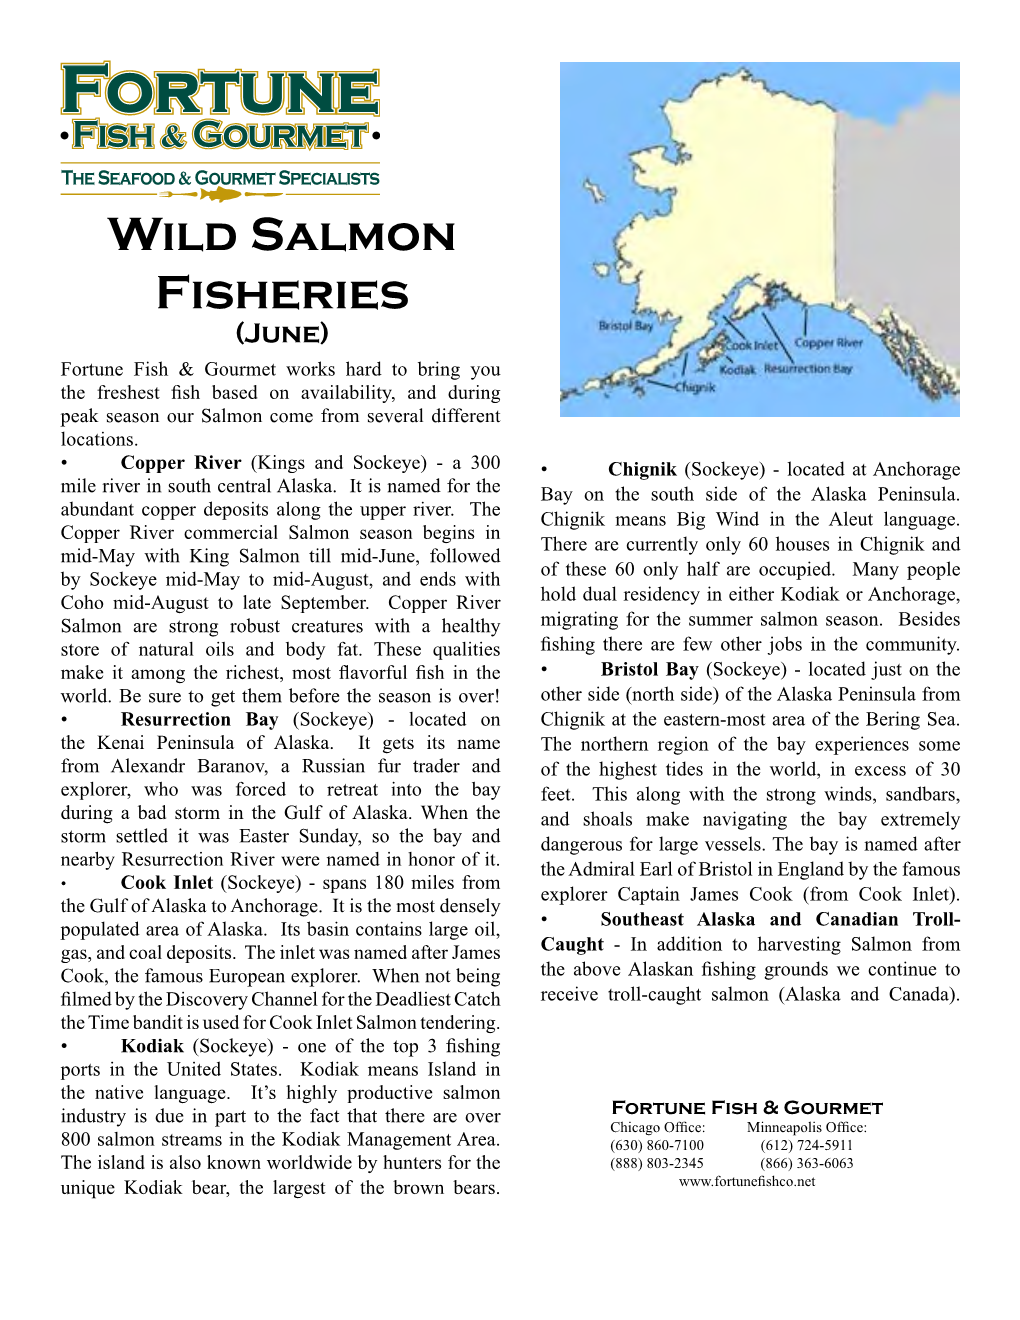 Wild Salmon Fisheries